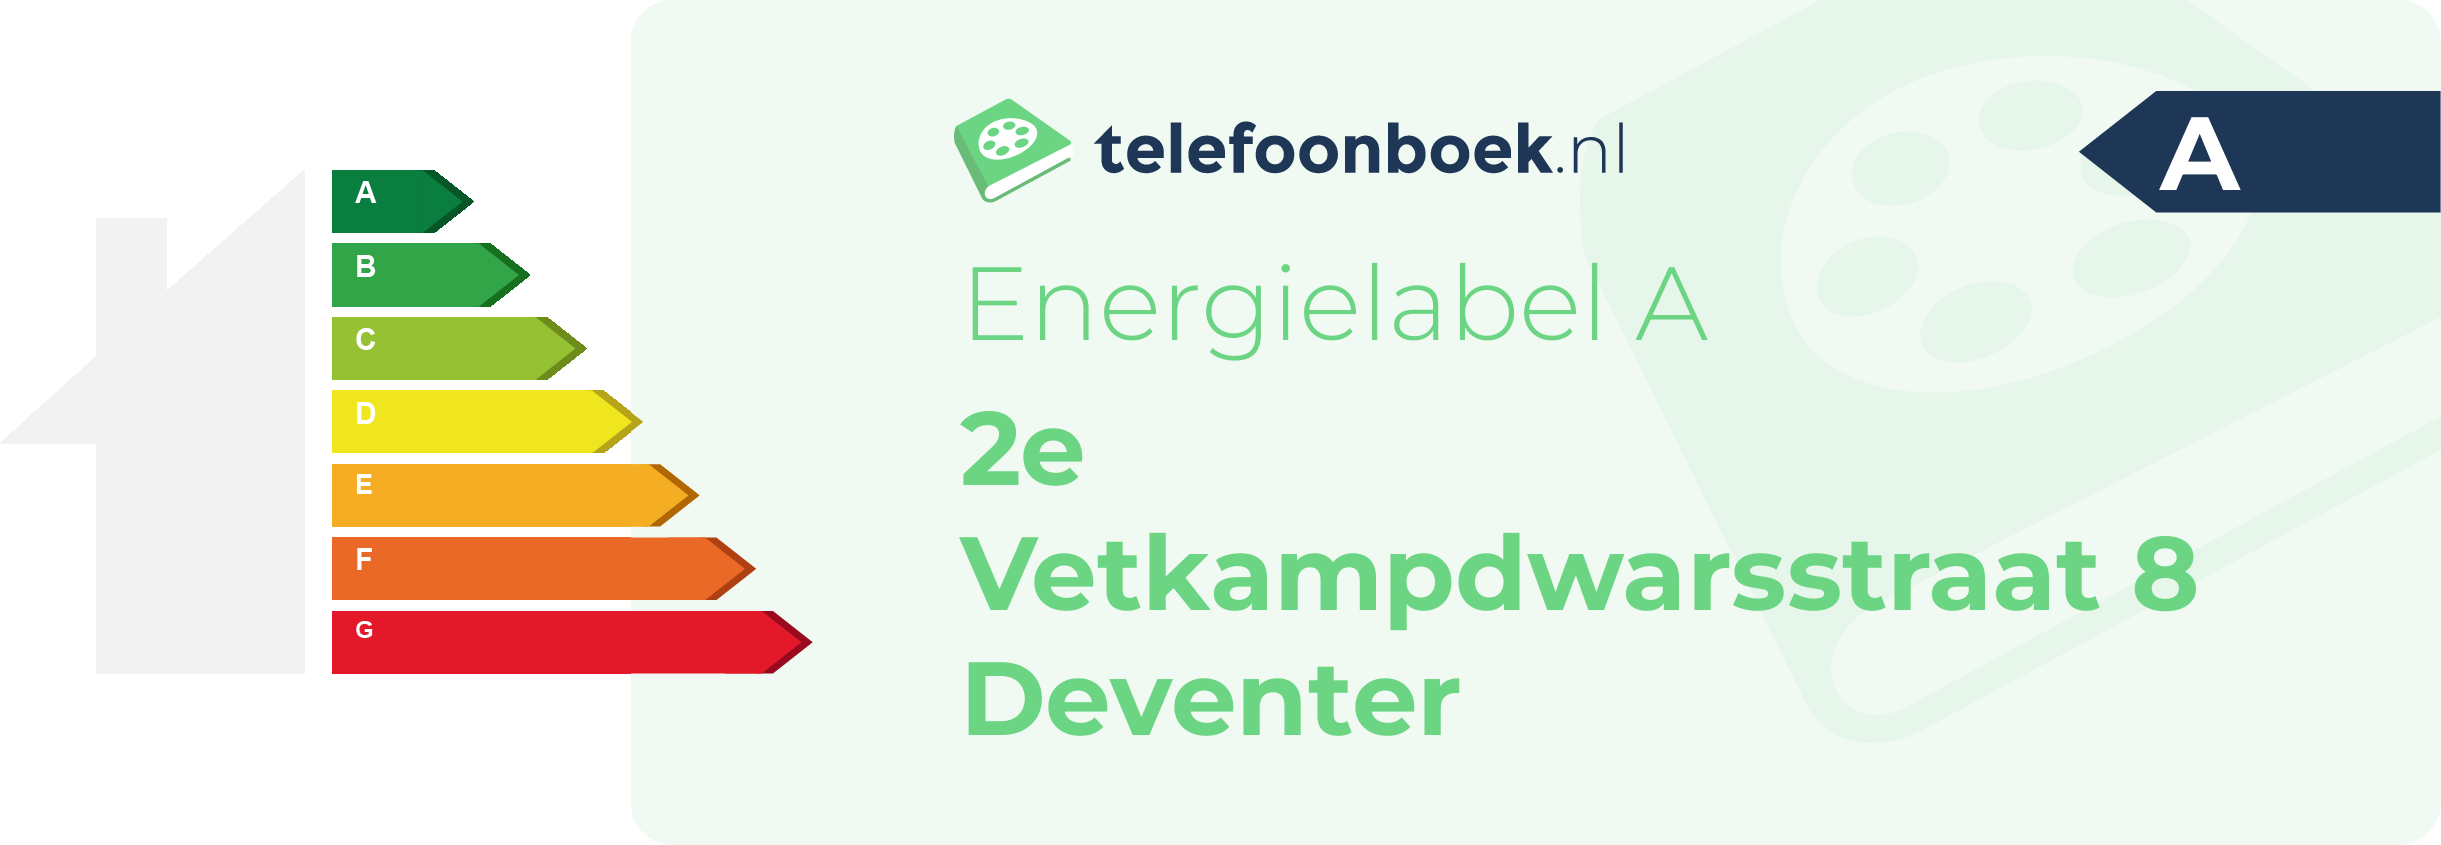 Energielabel 2e Vetkampdwarsstraat 8 Deventer